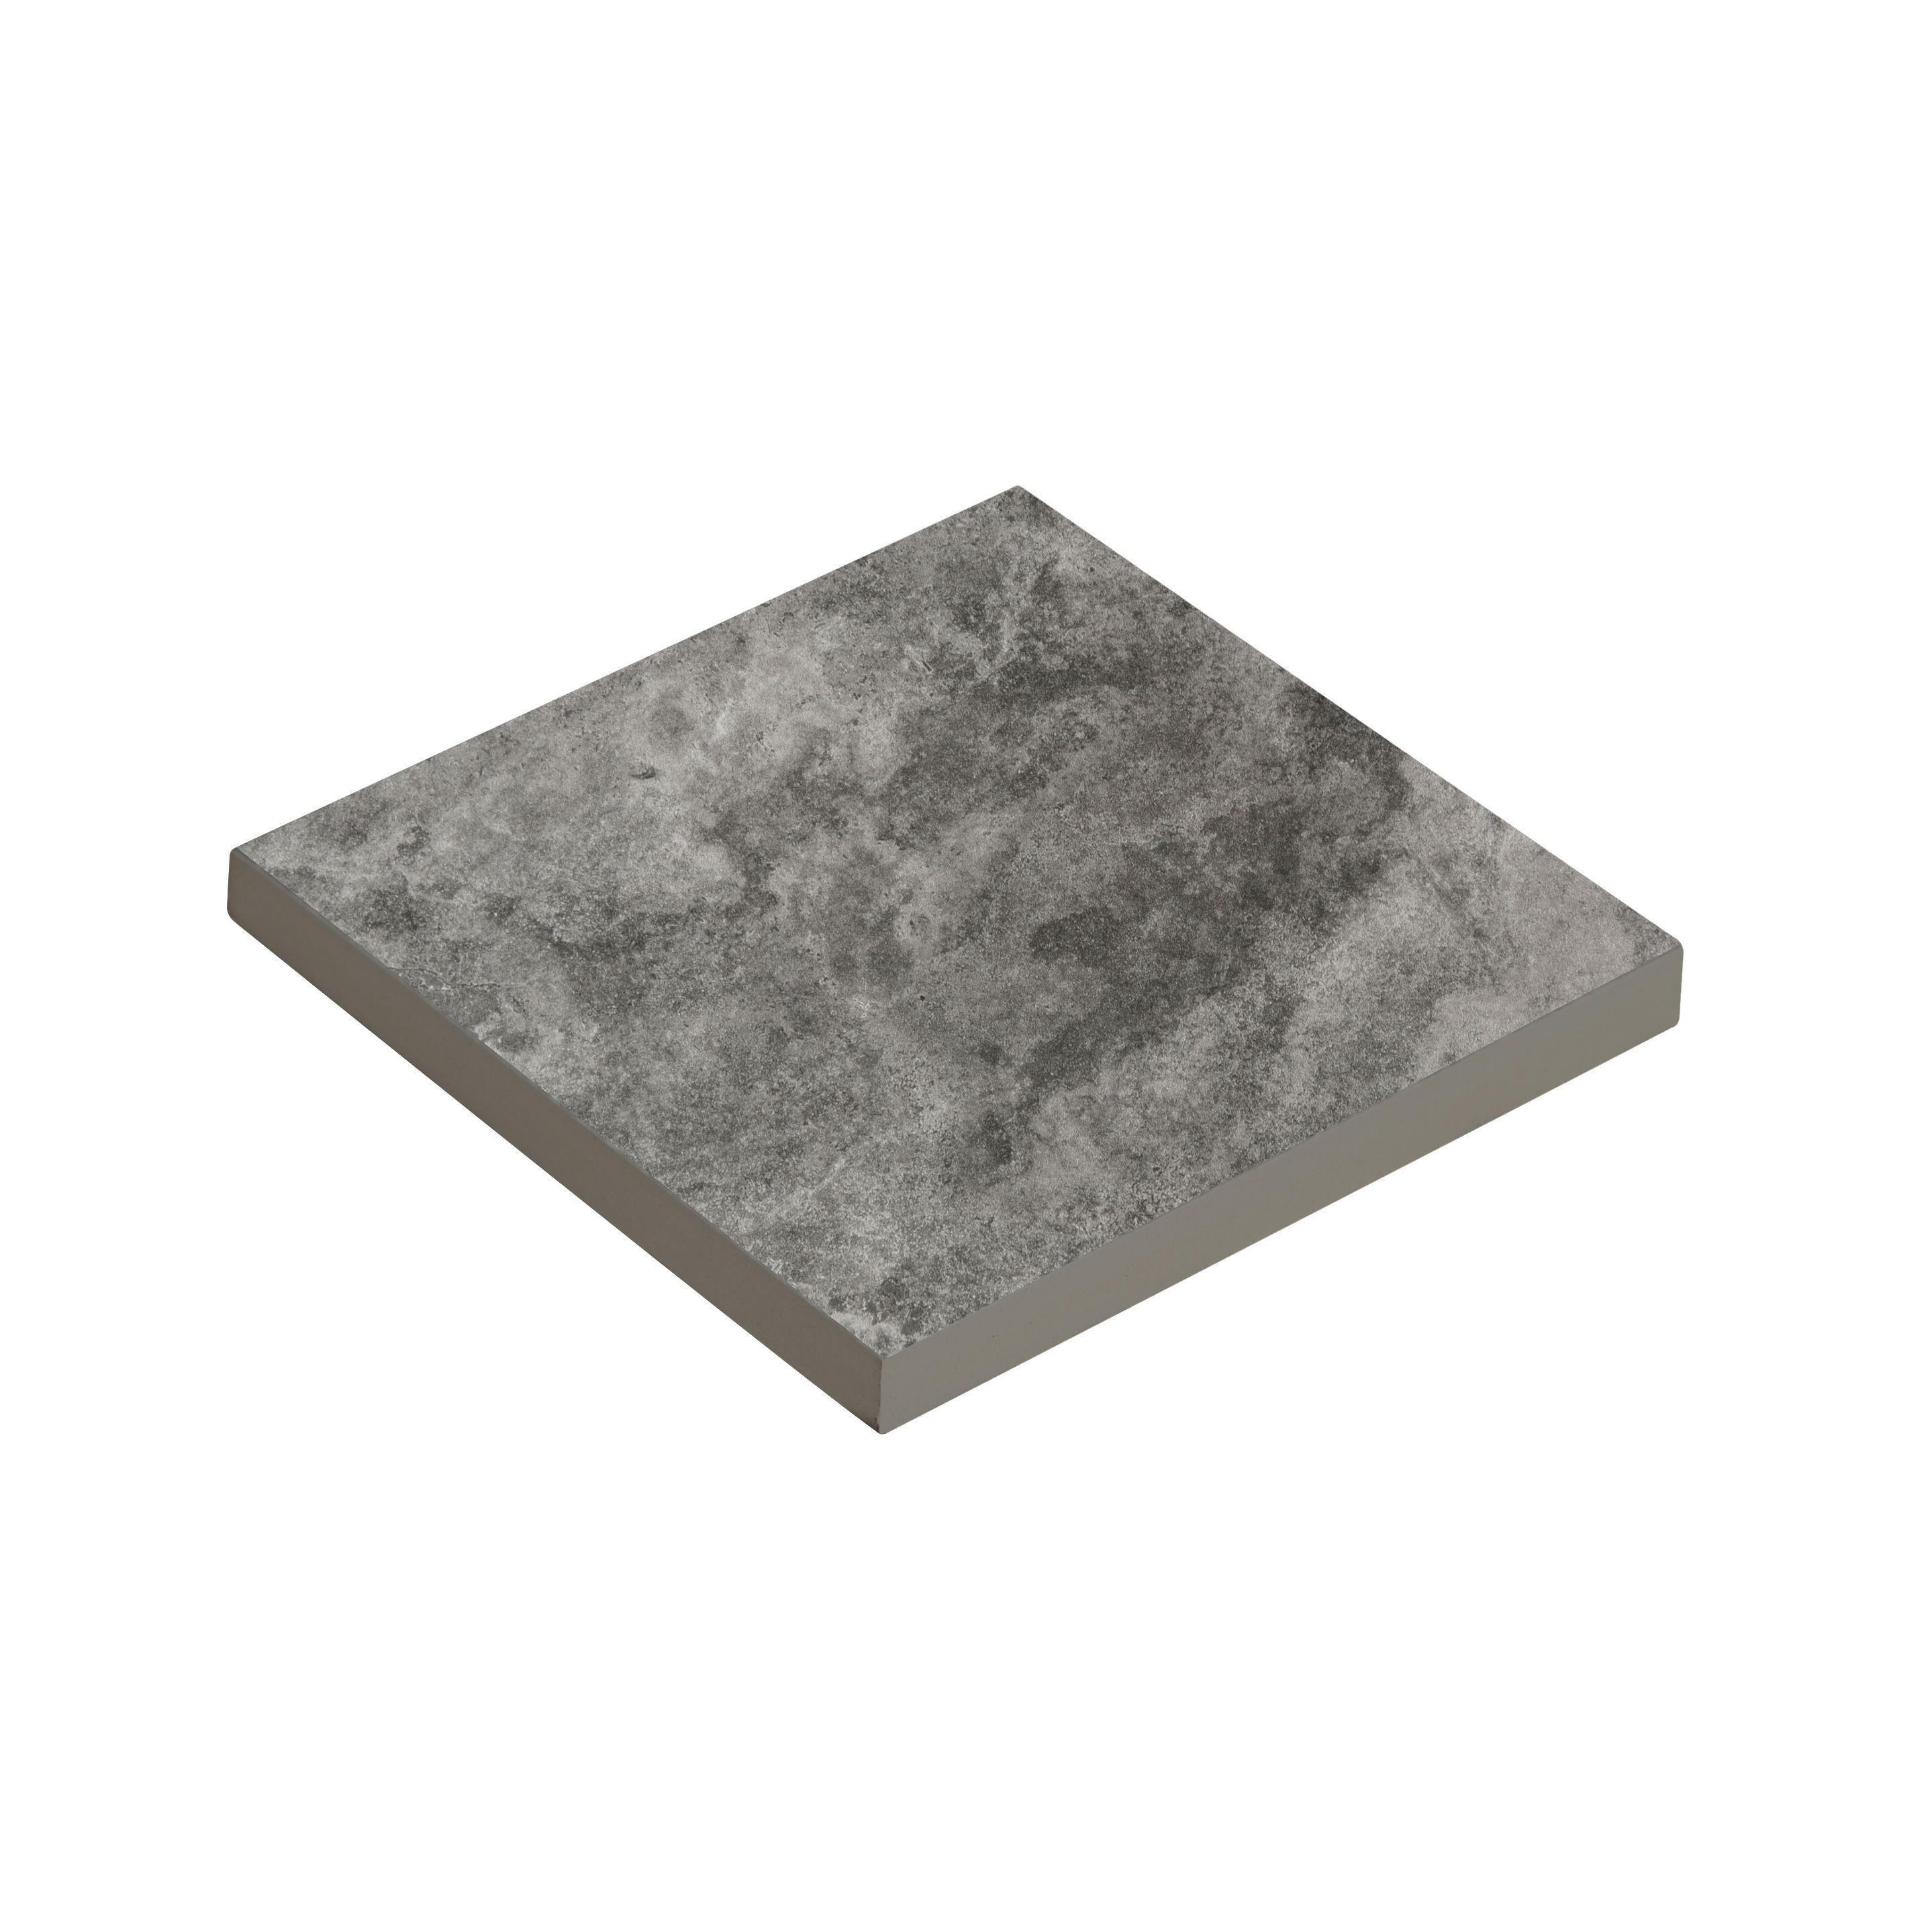 Oscano Dark grey Graphite Stone effect Ceramic Wall & floor Tile Sample